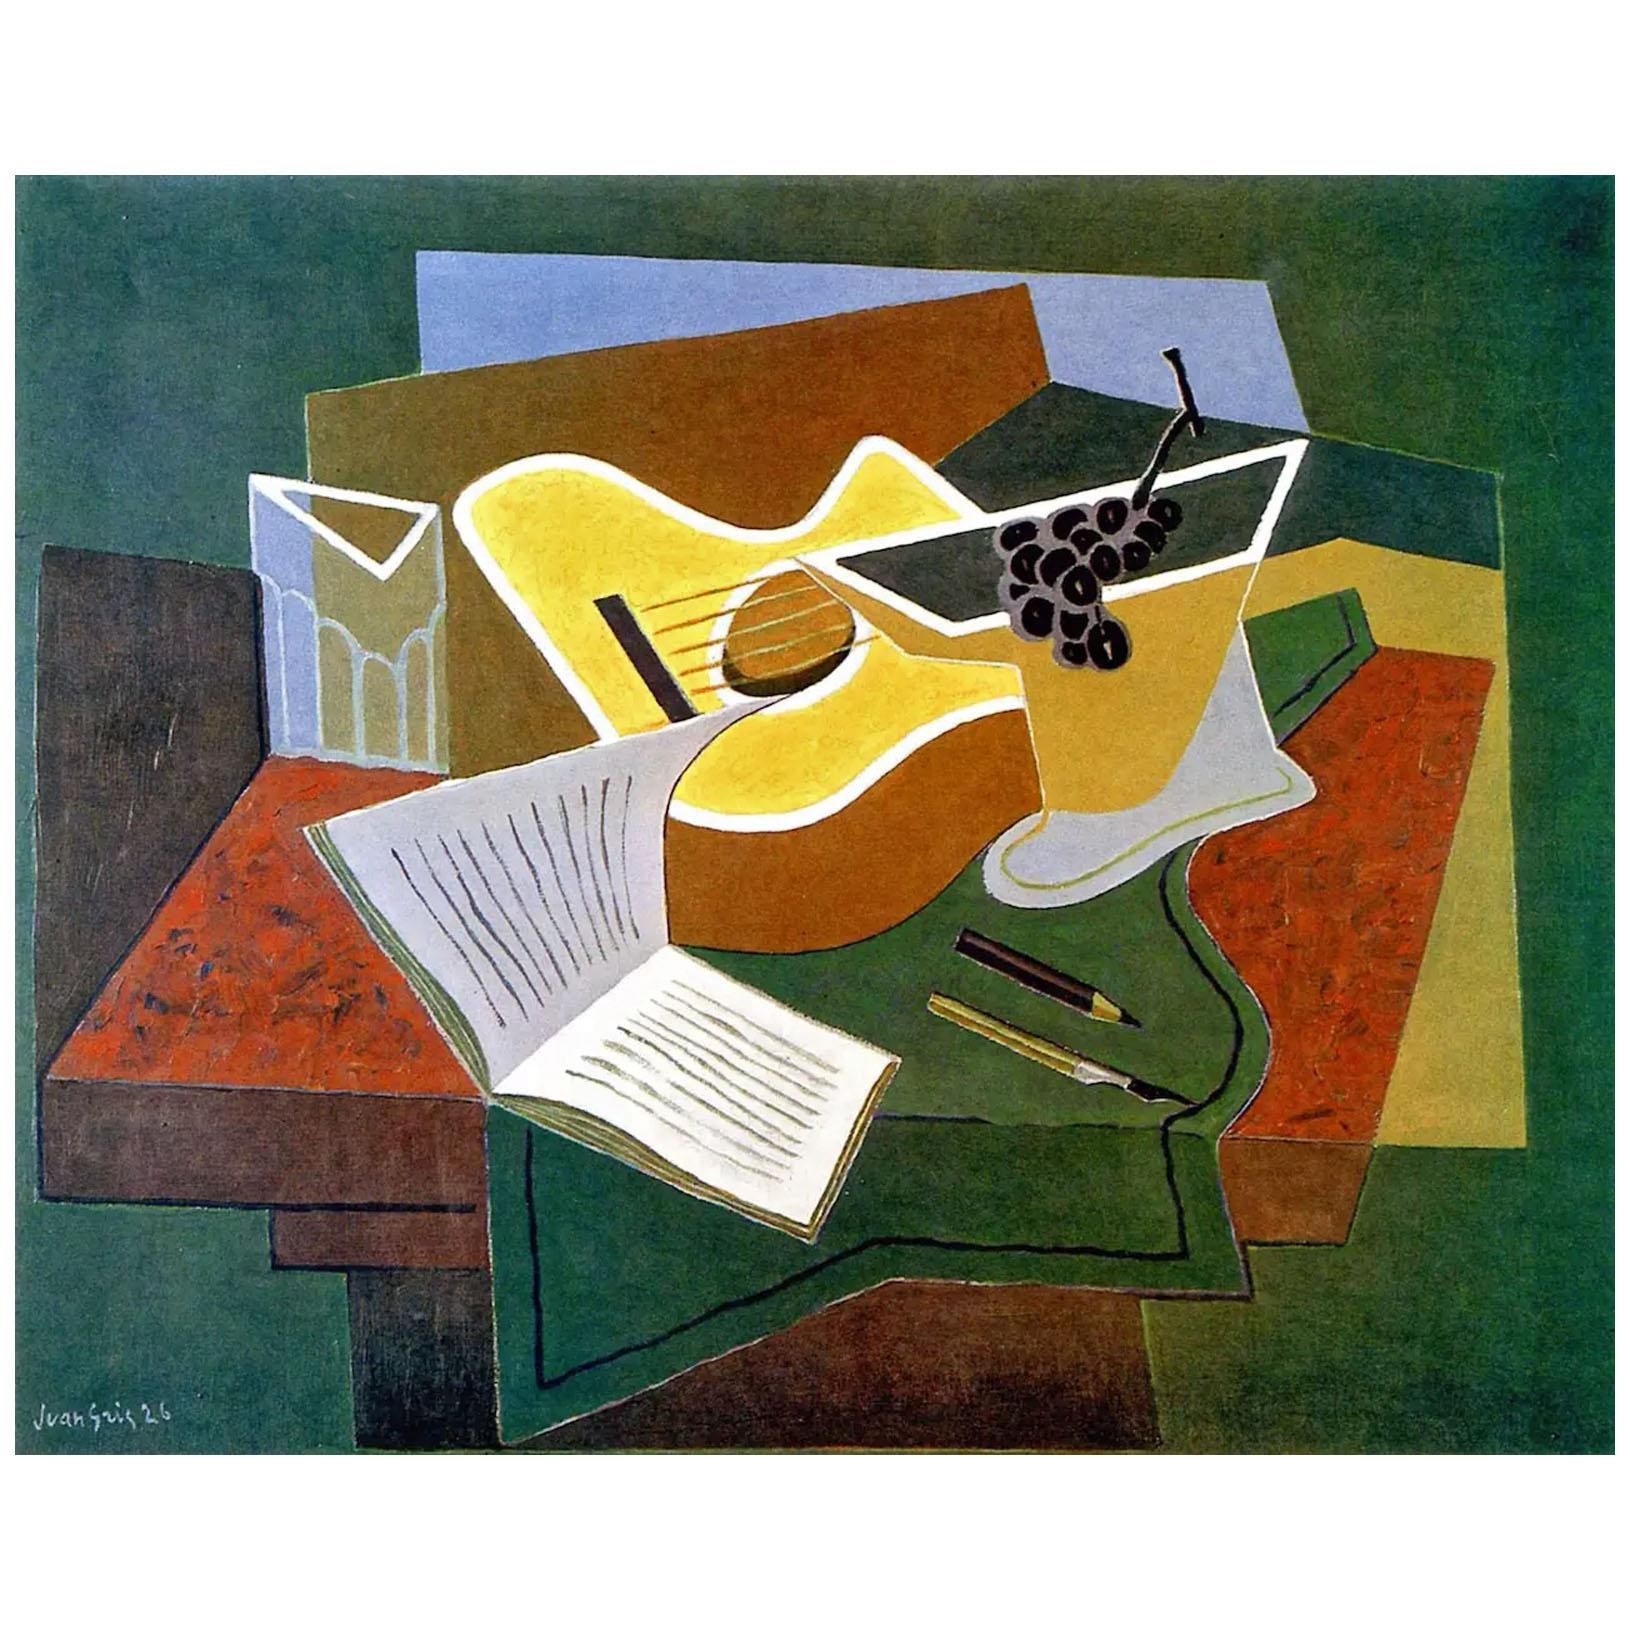 Juan Gris. Guitare et grappe de raisin. 1926. Kunstmuseum Bern